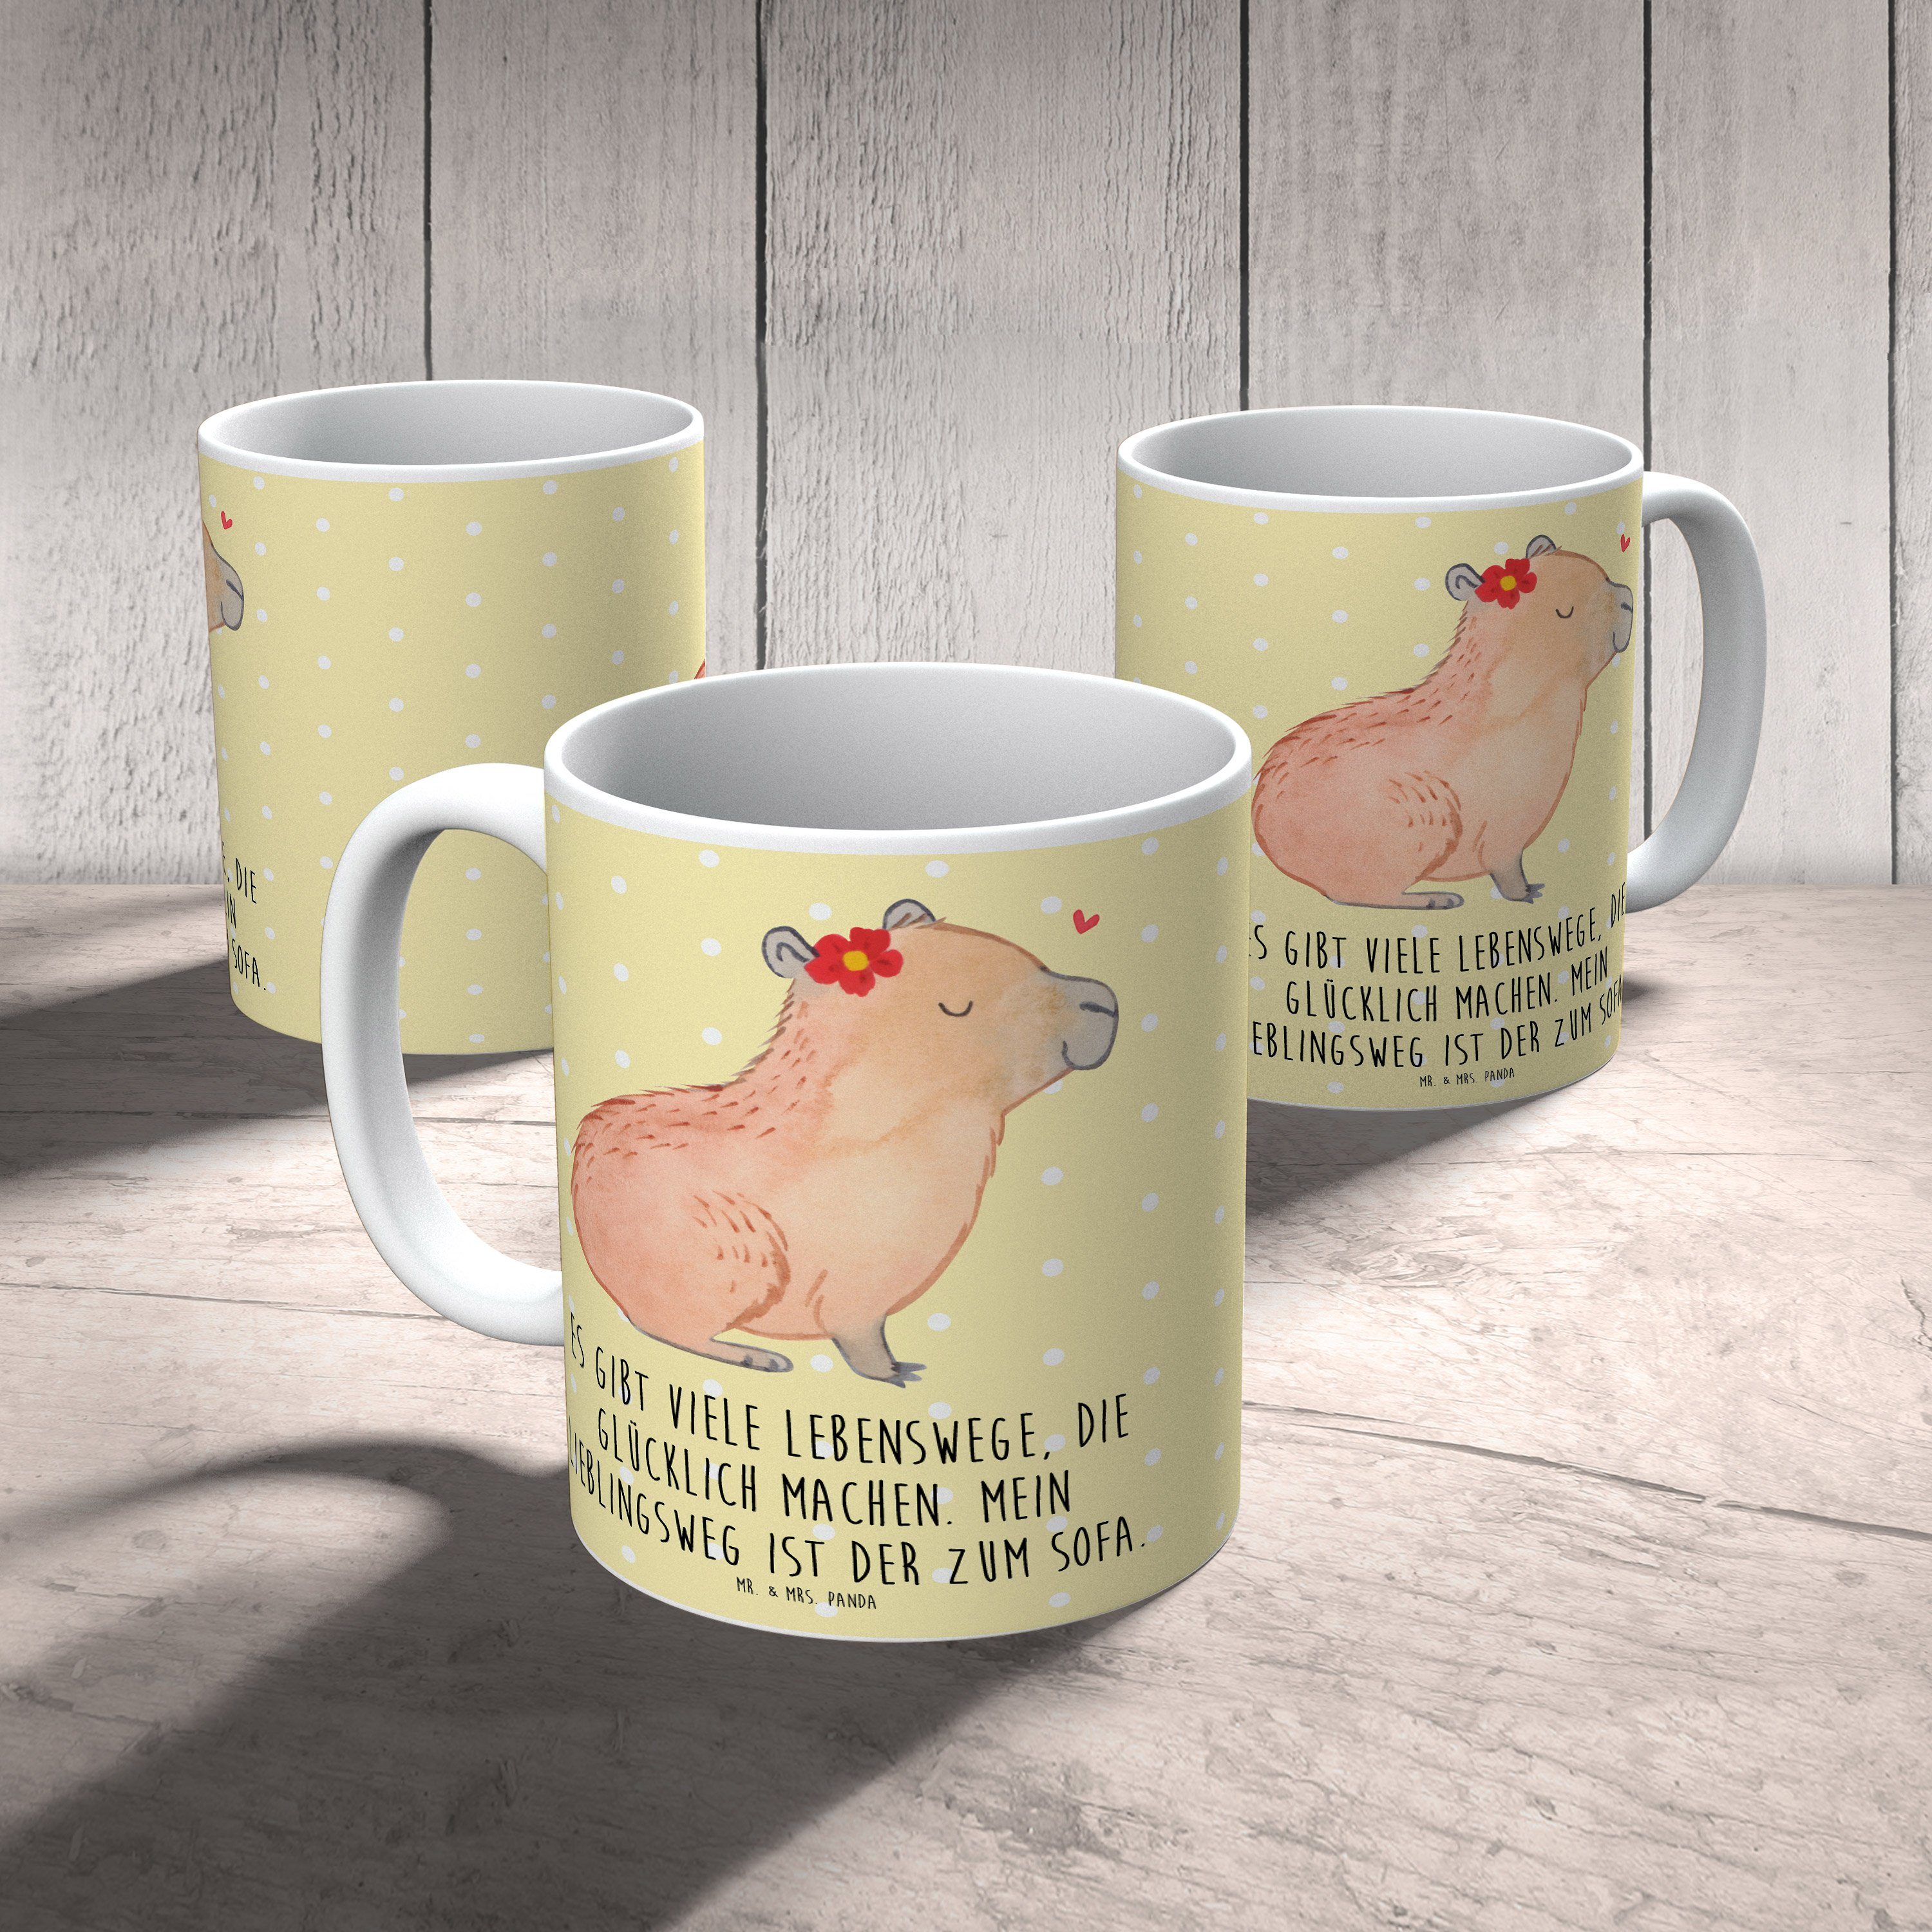 Mr. & Mrs. Blume Keramik Gute Capybara Panda Gelb Pastell - Laune, Teetasse, Geschenk, - Tasse Tiere